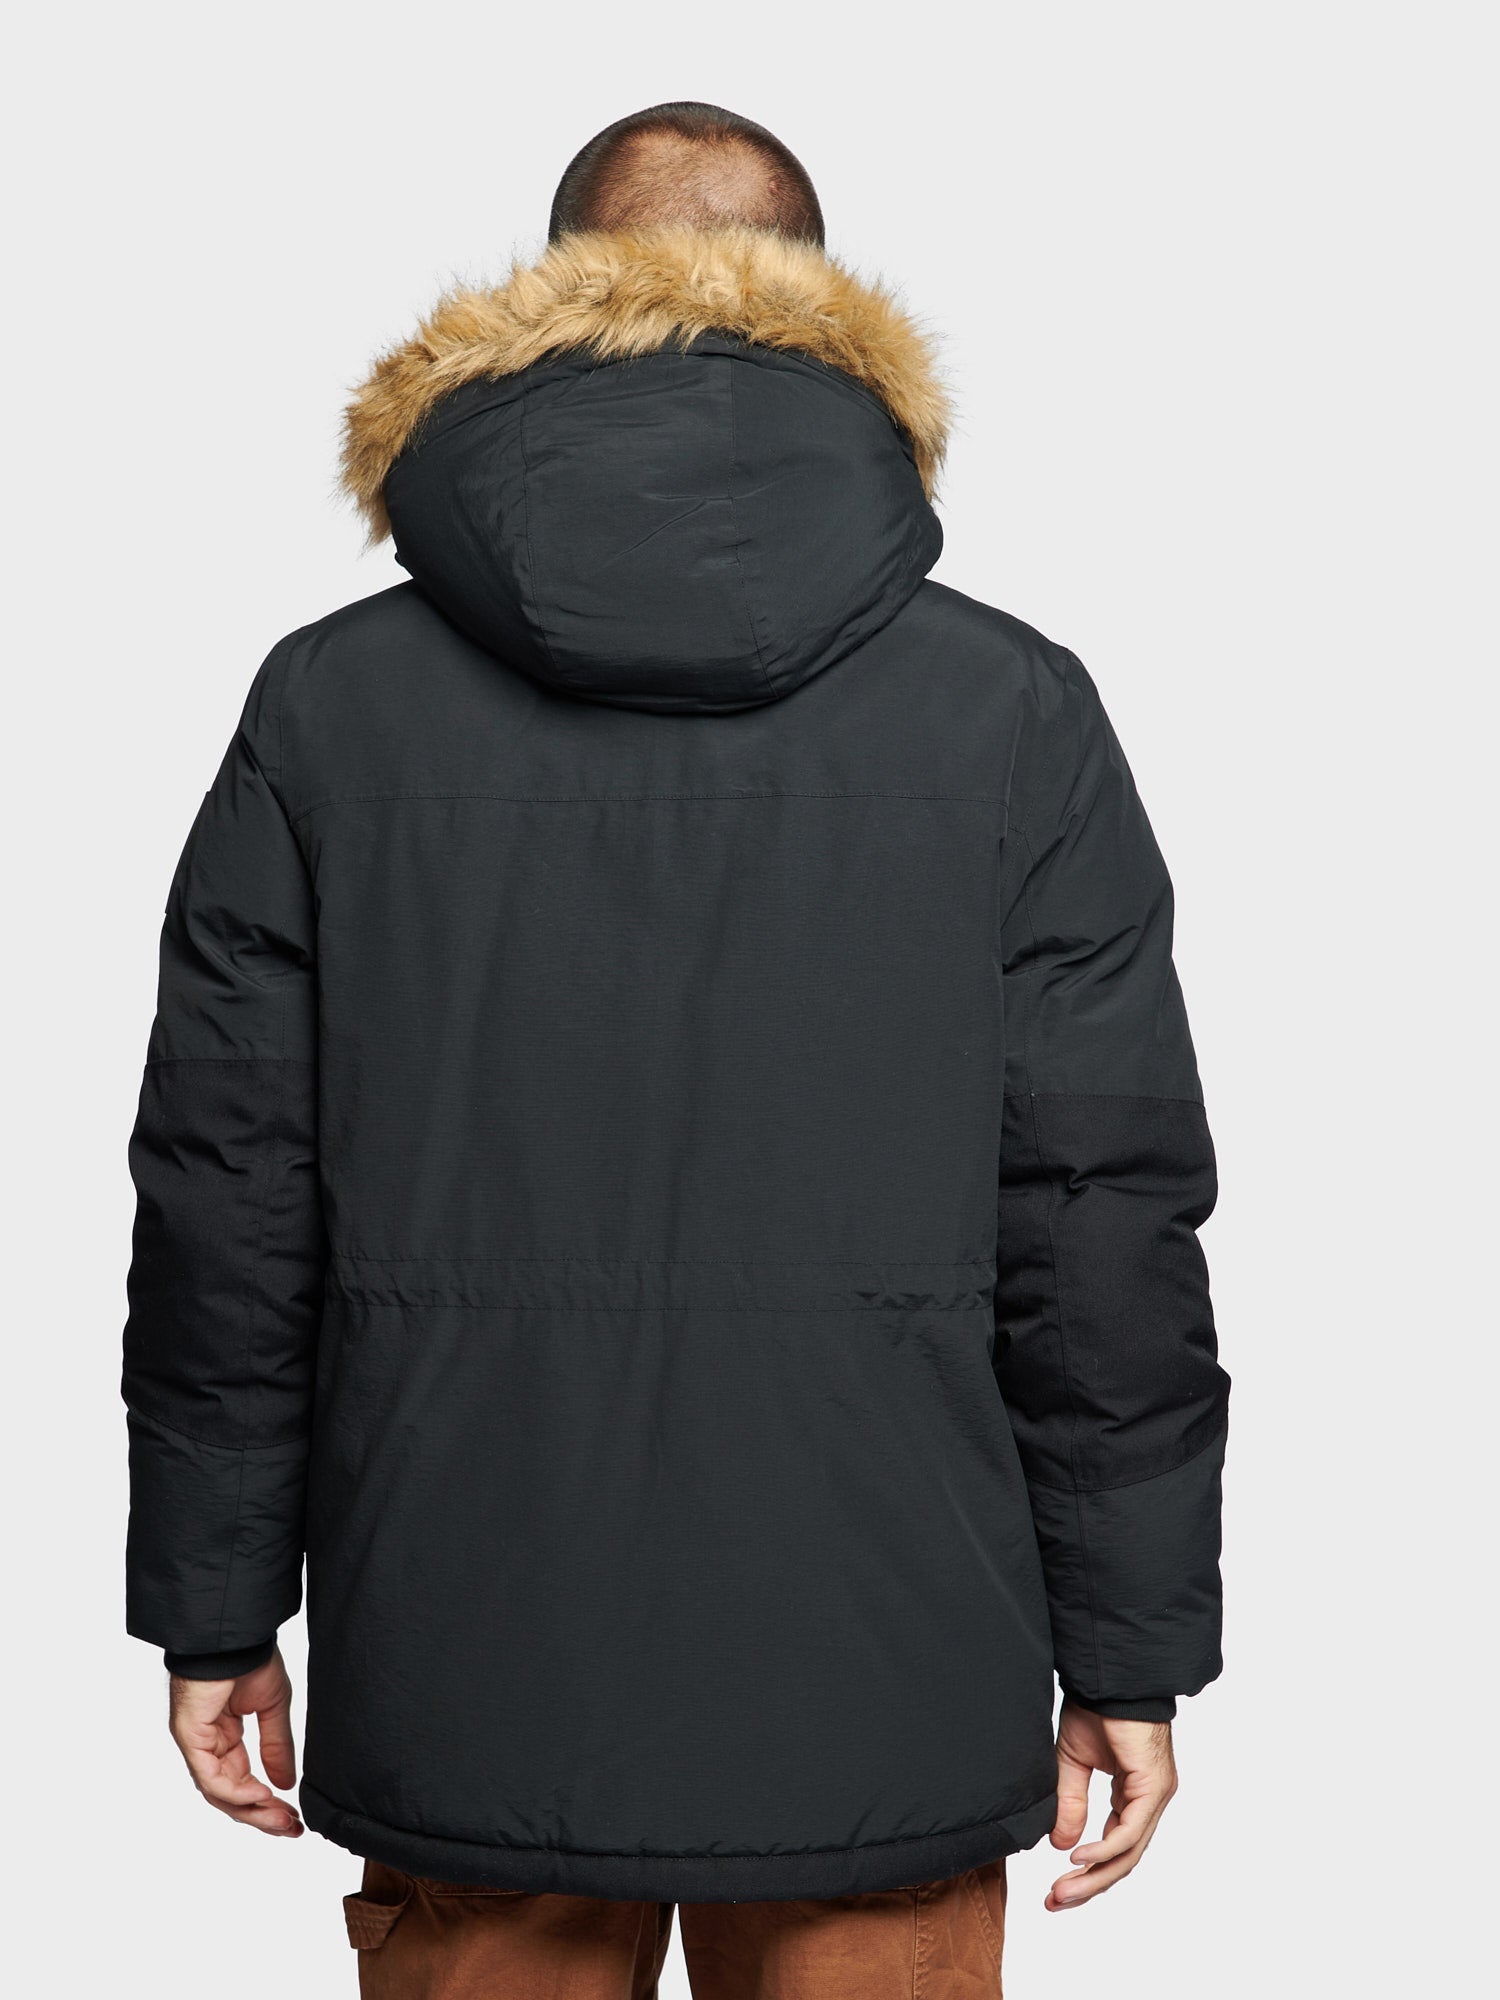 Ultimate Winter Parka Jacket in Black